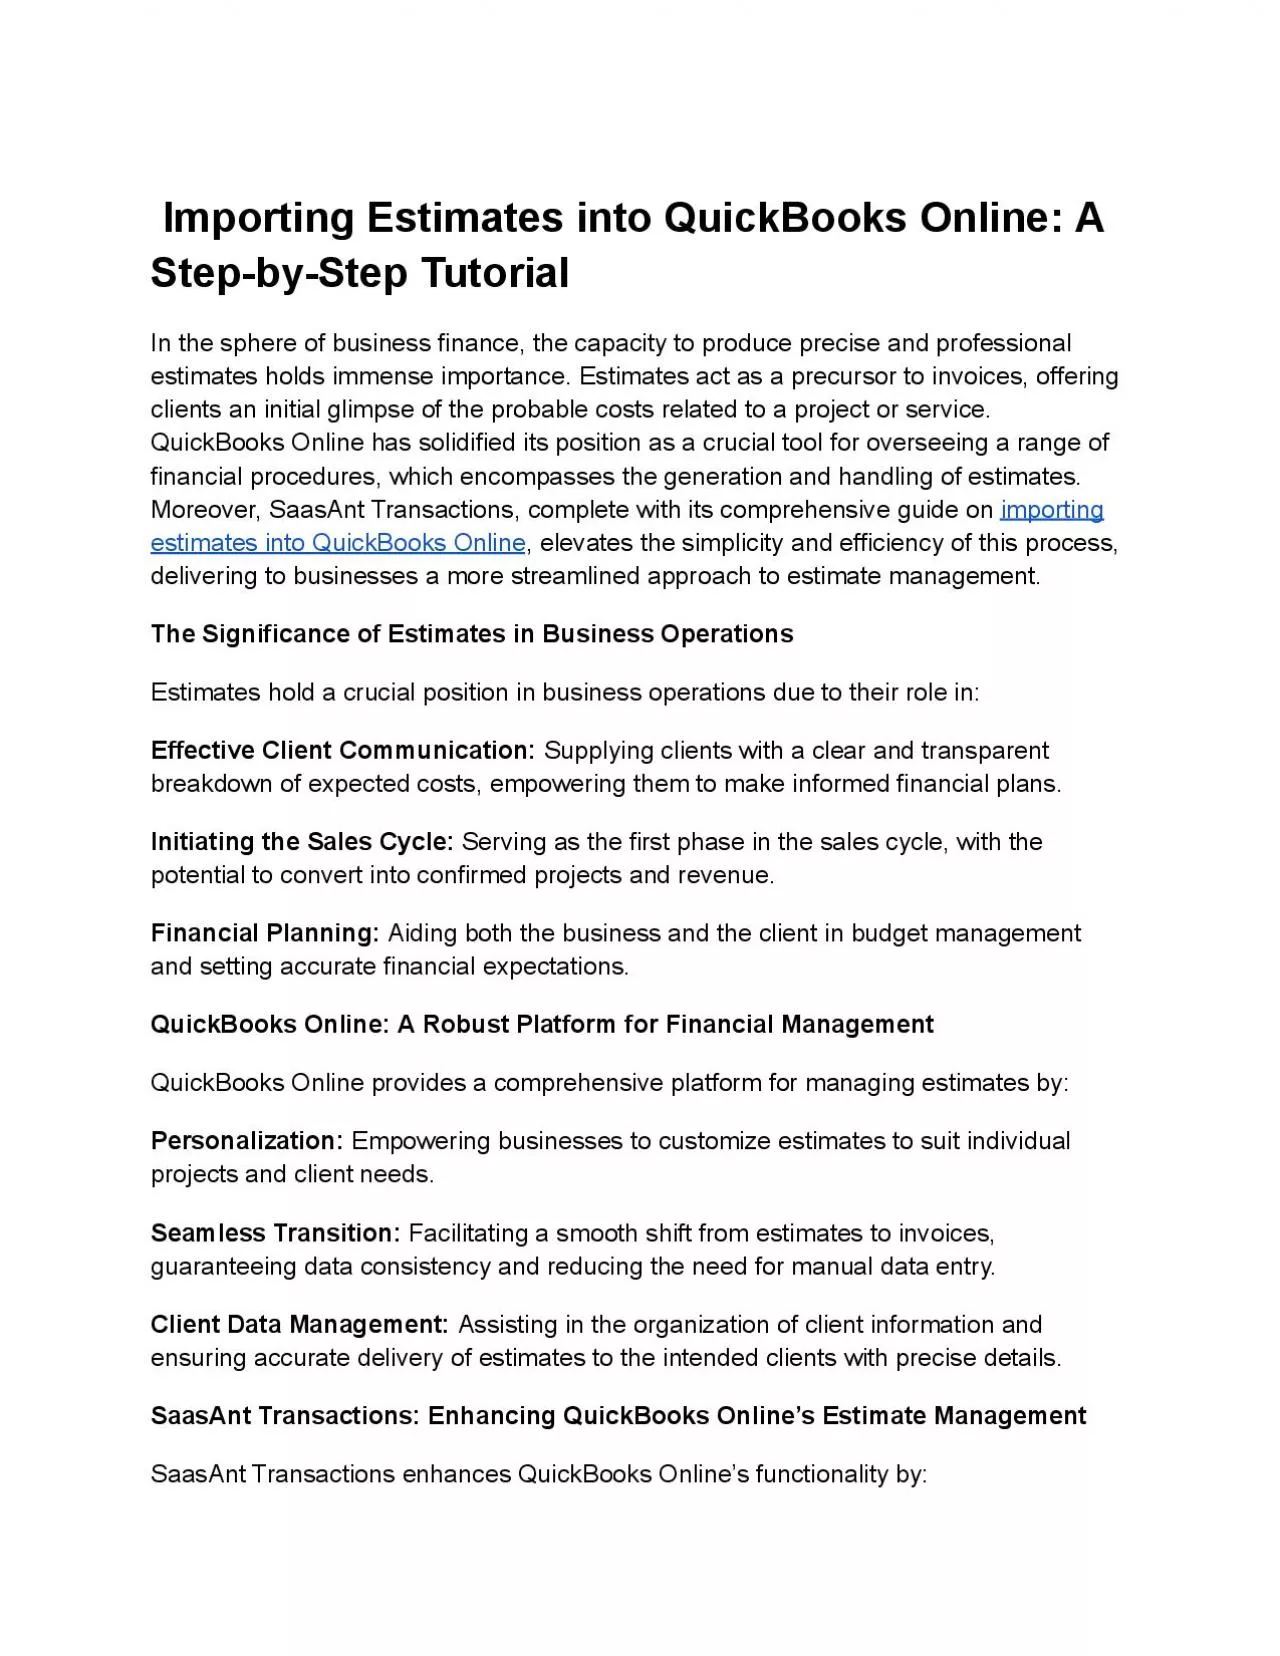 Bulk Import Estimates into QuickBooks Online from Excel/CSV/TXT/IIF : SaasAnt Support